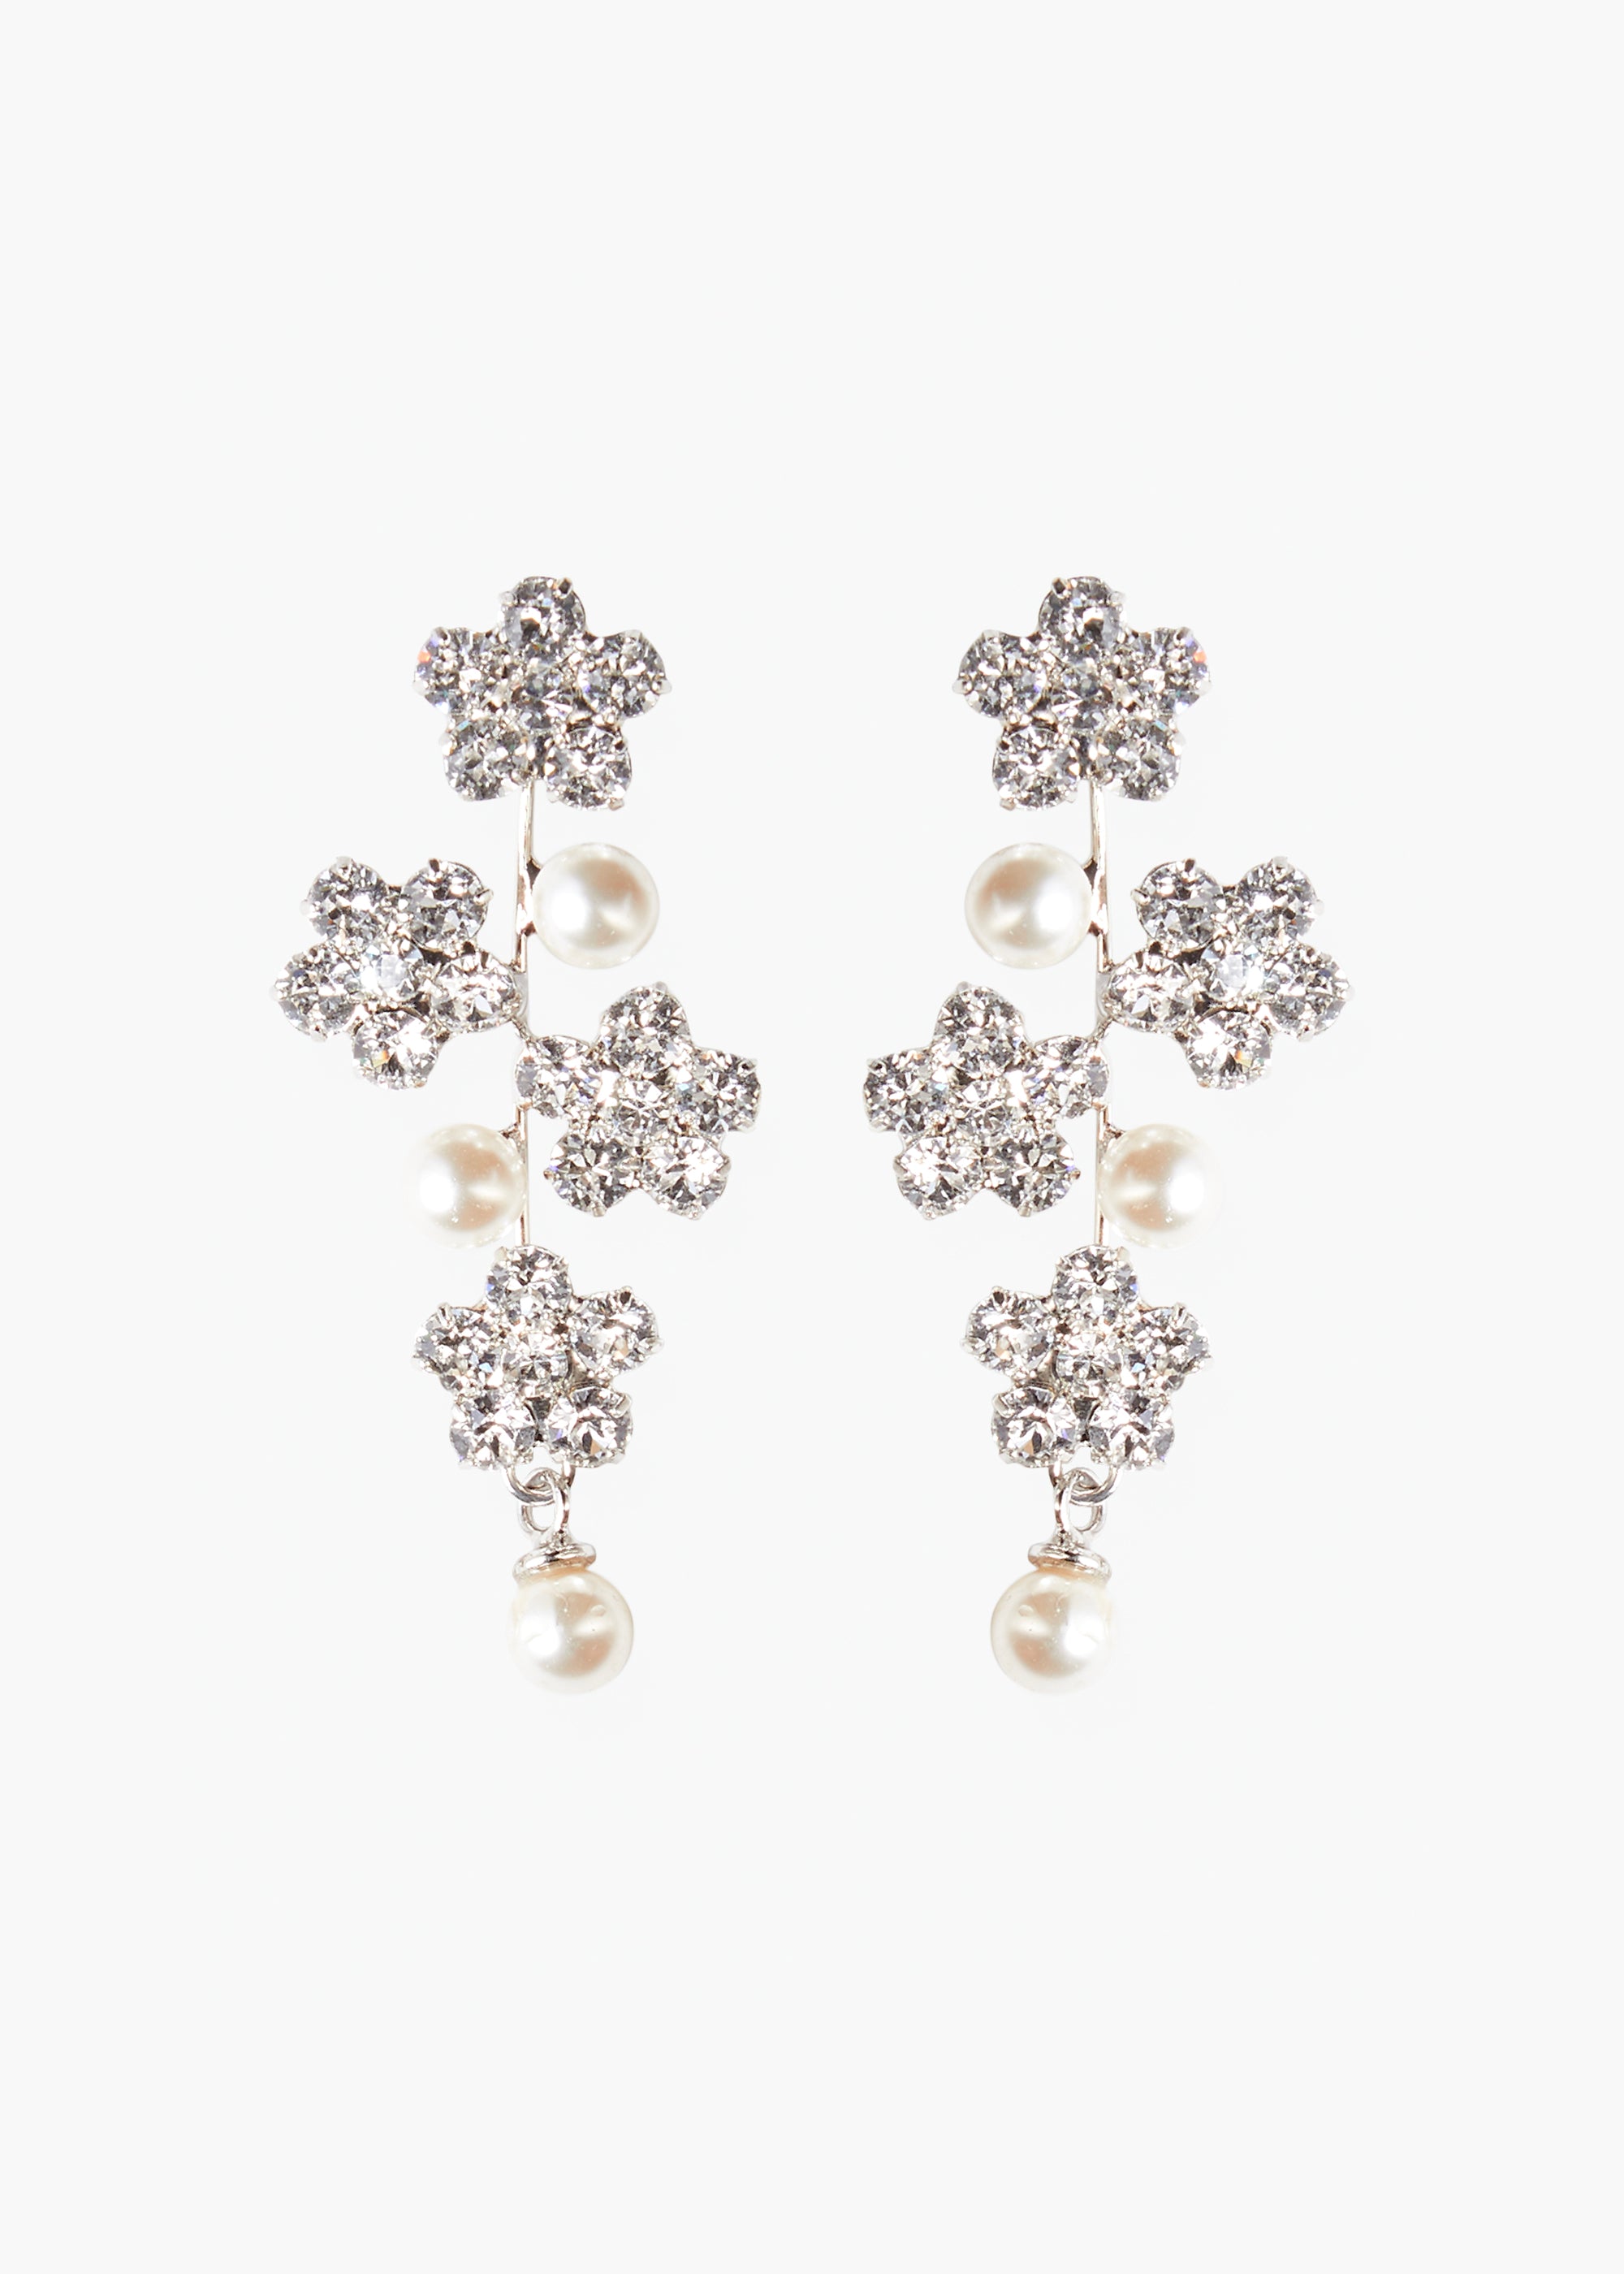 Crystal bridal bow earrings - Dramatic crystal double bow earrings